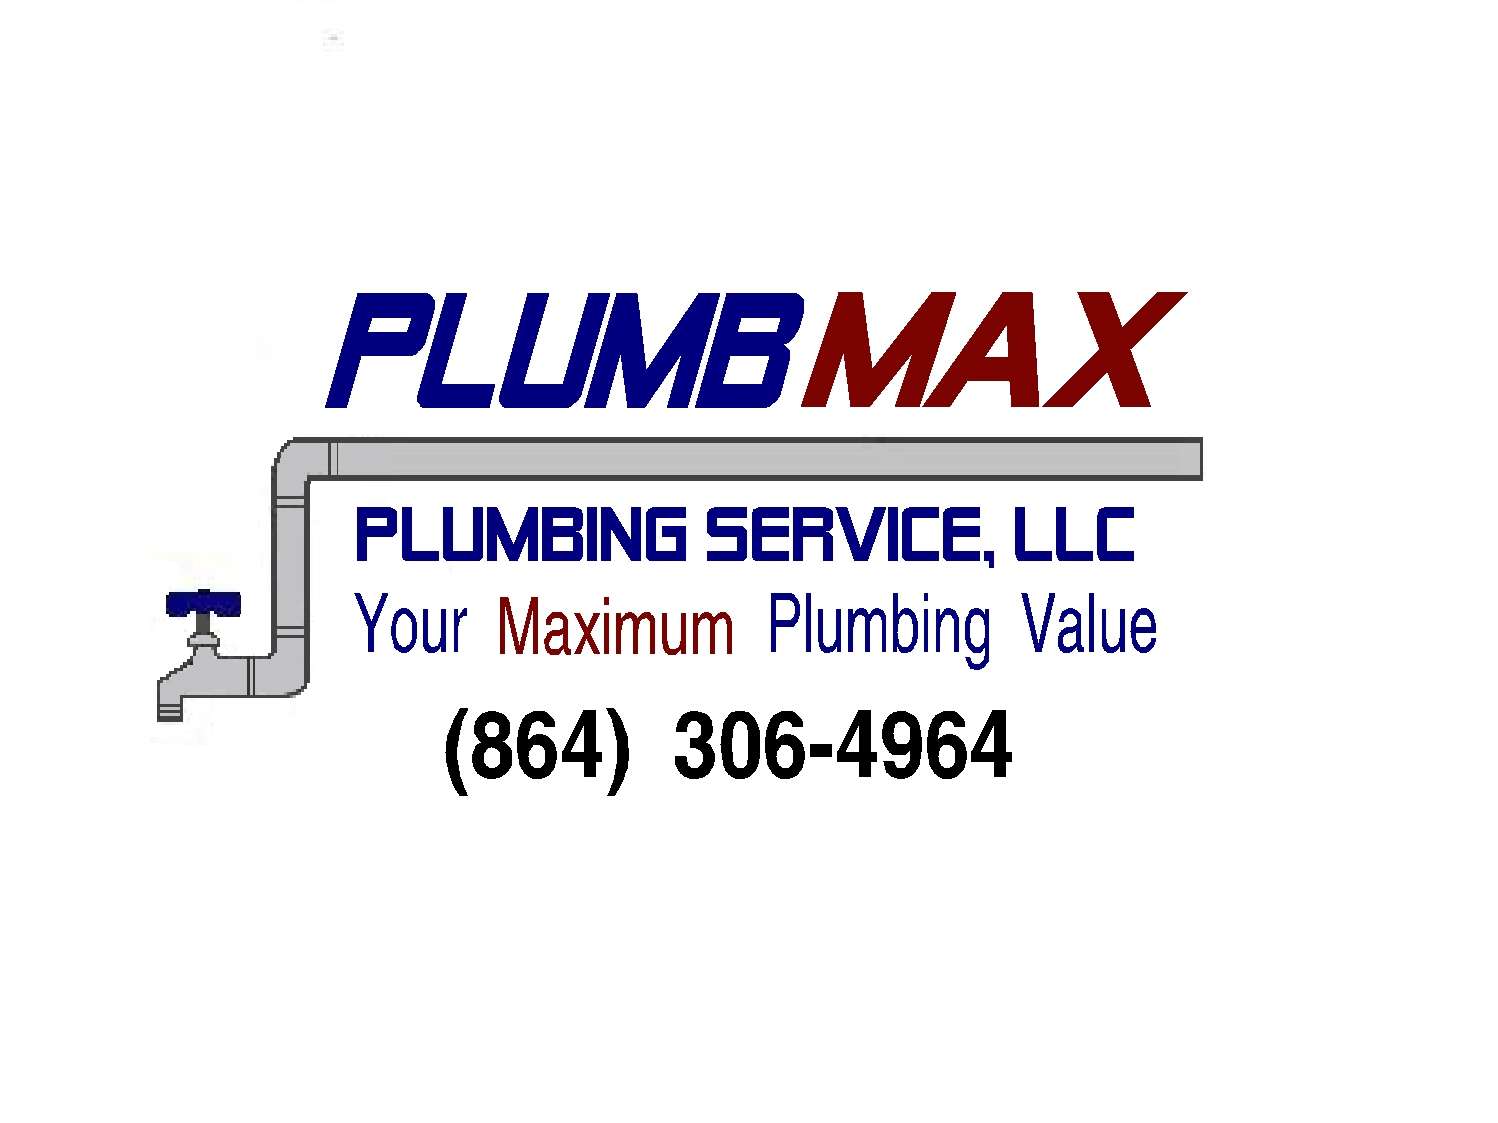 Plumbmax Plumbing Services, LLC Logo